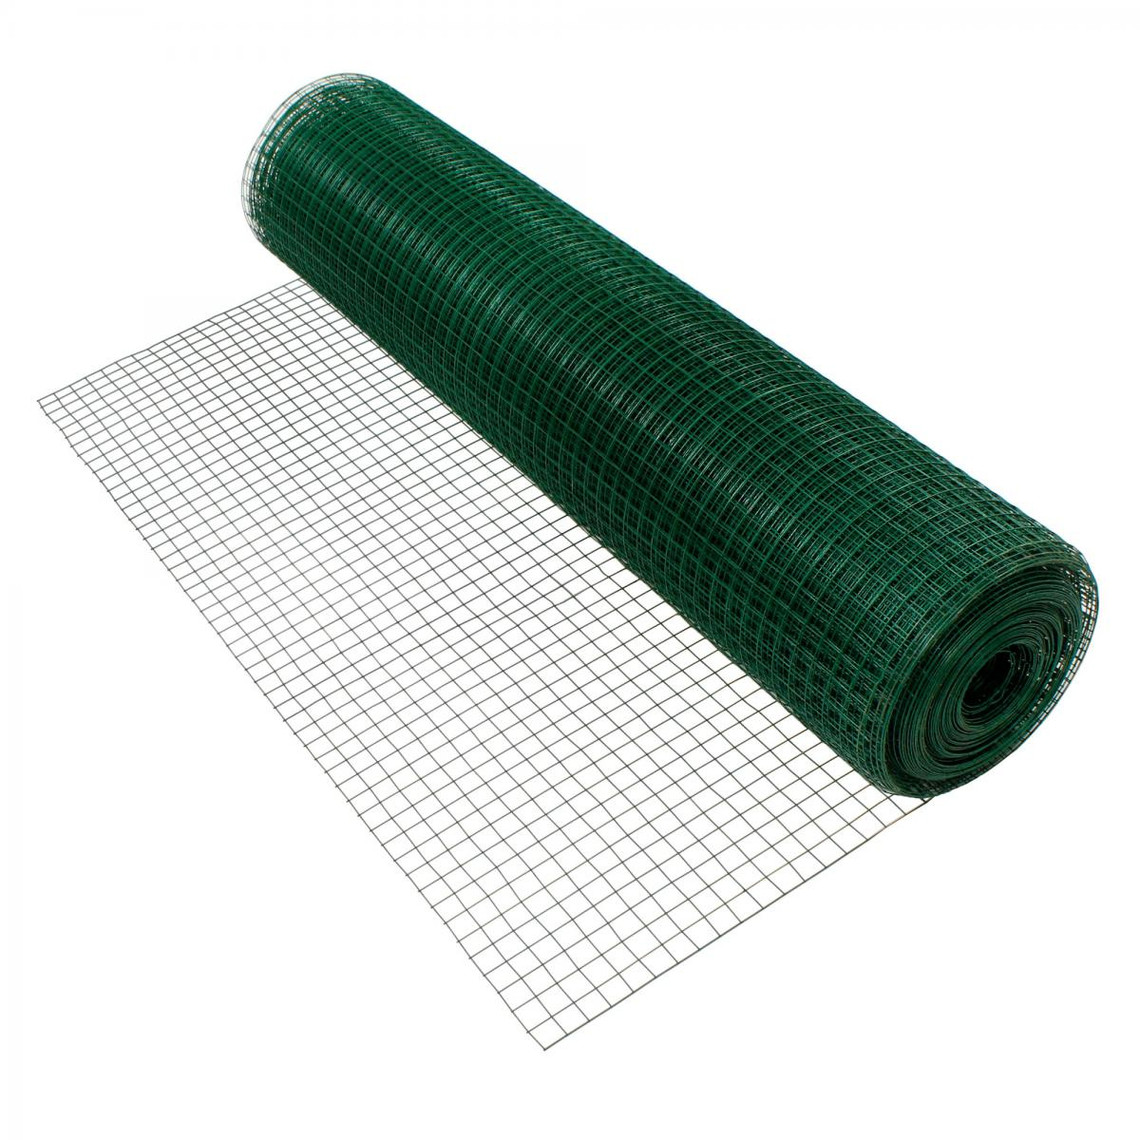 Ecd Germany Grillage maille de jardin vert clôture fil volière flexible 1,2 mm 25x25 mm 10m